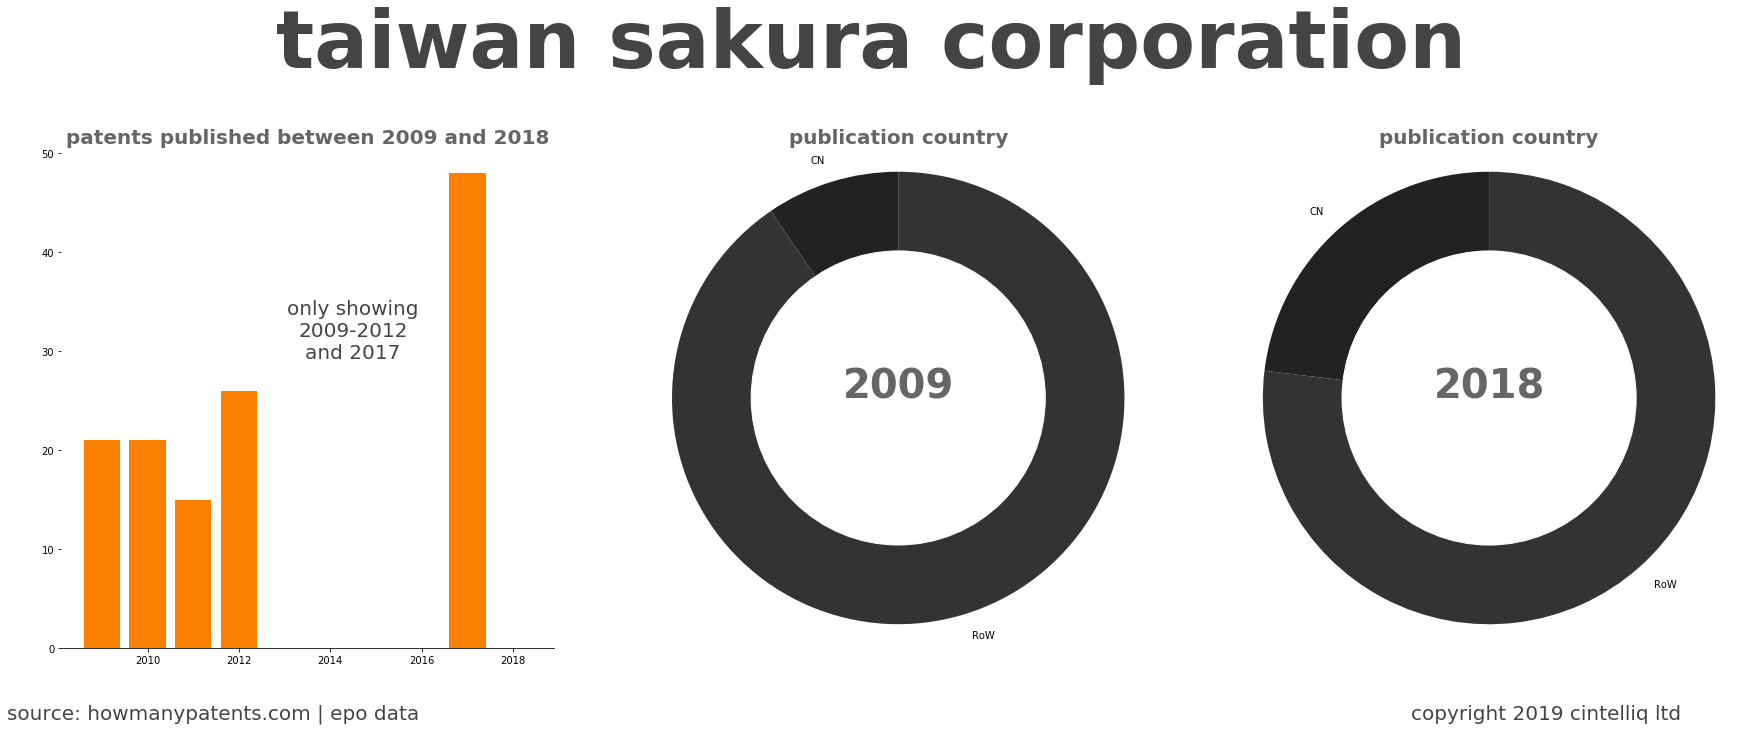 summary of patents for Taiwan Sakura Corporation